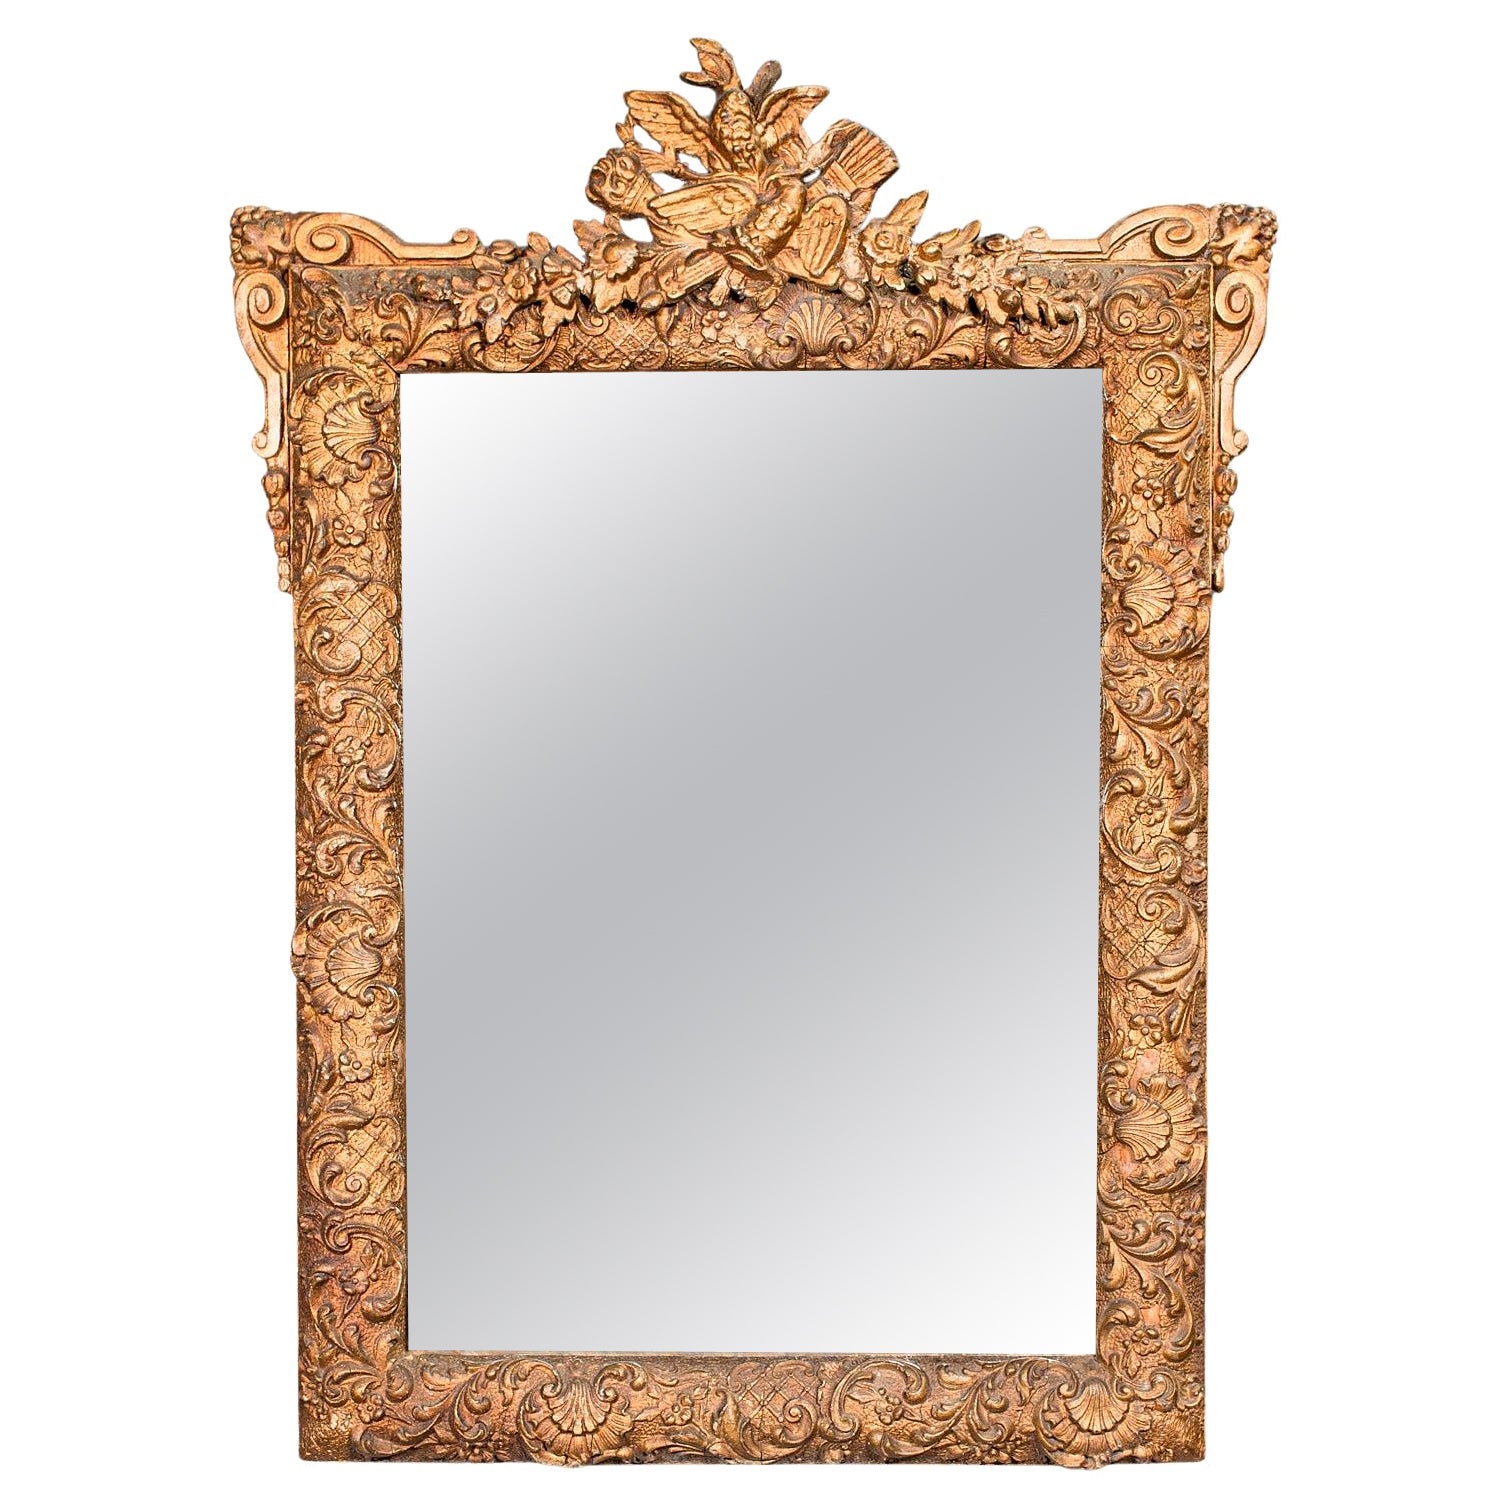 Antique Wall Mirror, Italian, Gilt Gesso, Ornate, Hallway, Overmantle, Regency For Sale